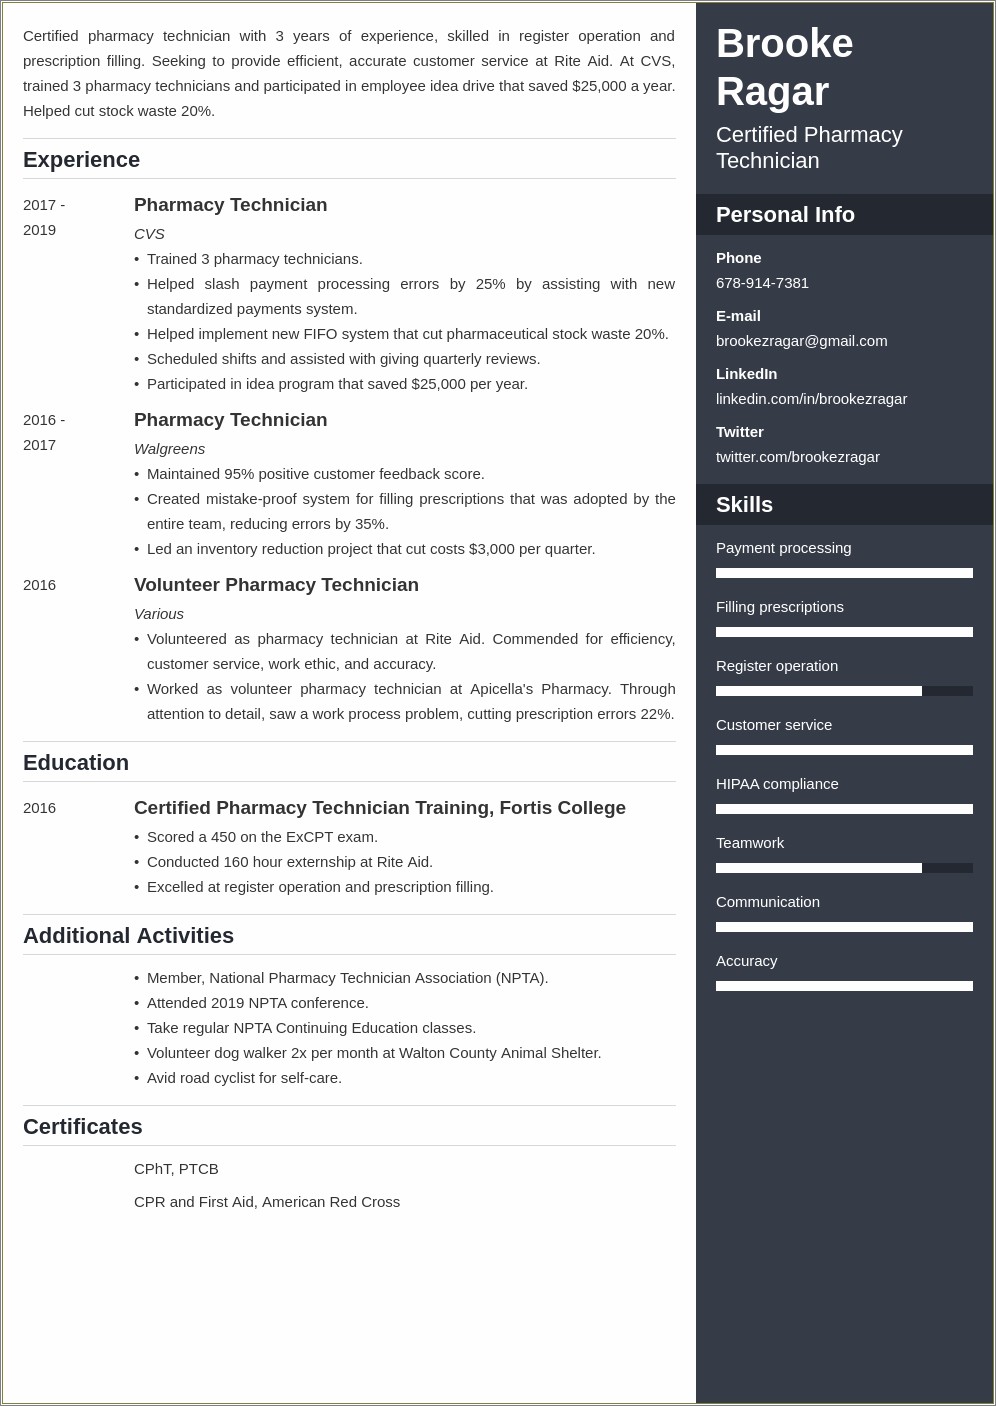 Sample Resume For Certified Pharmacy Technician